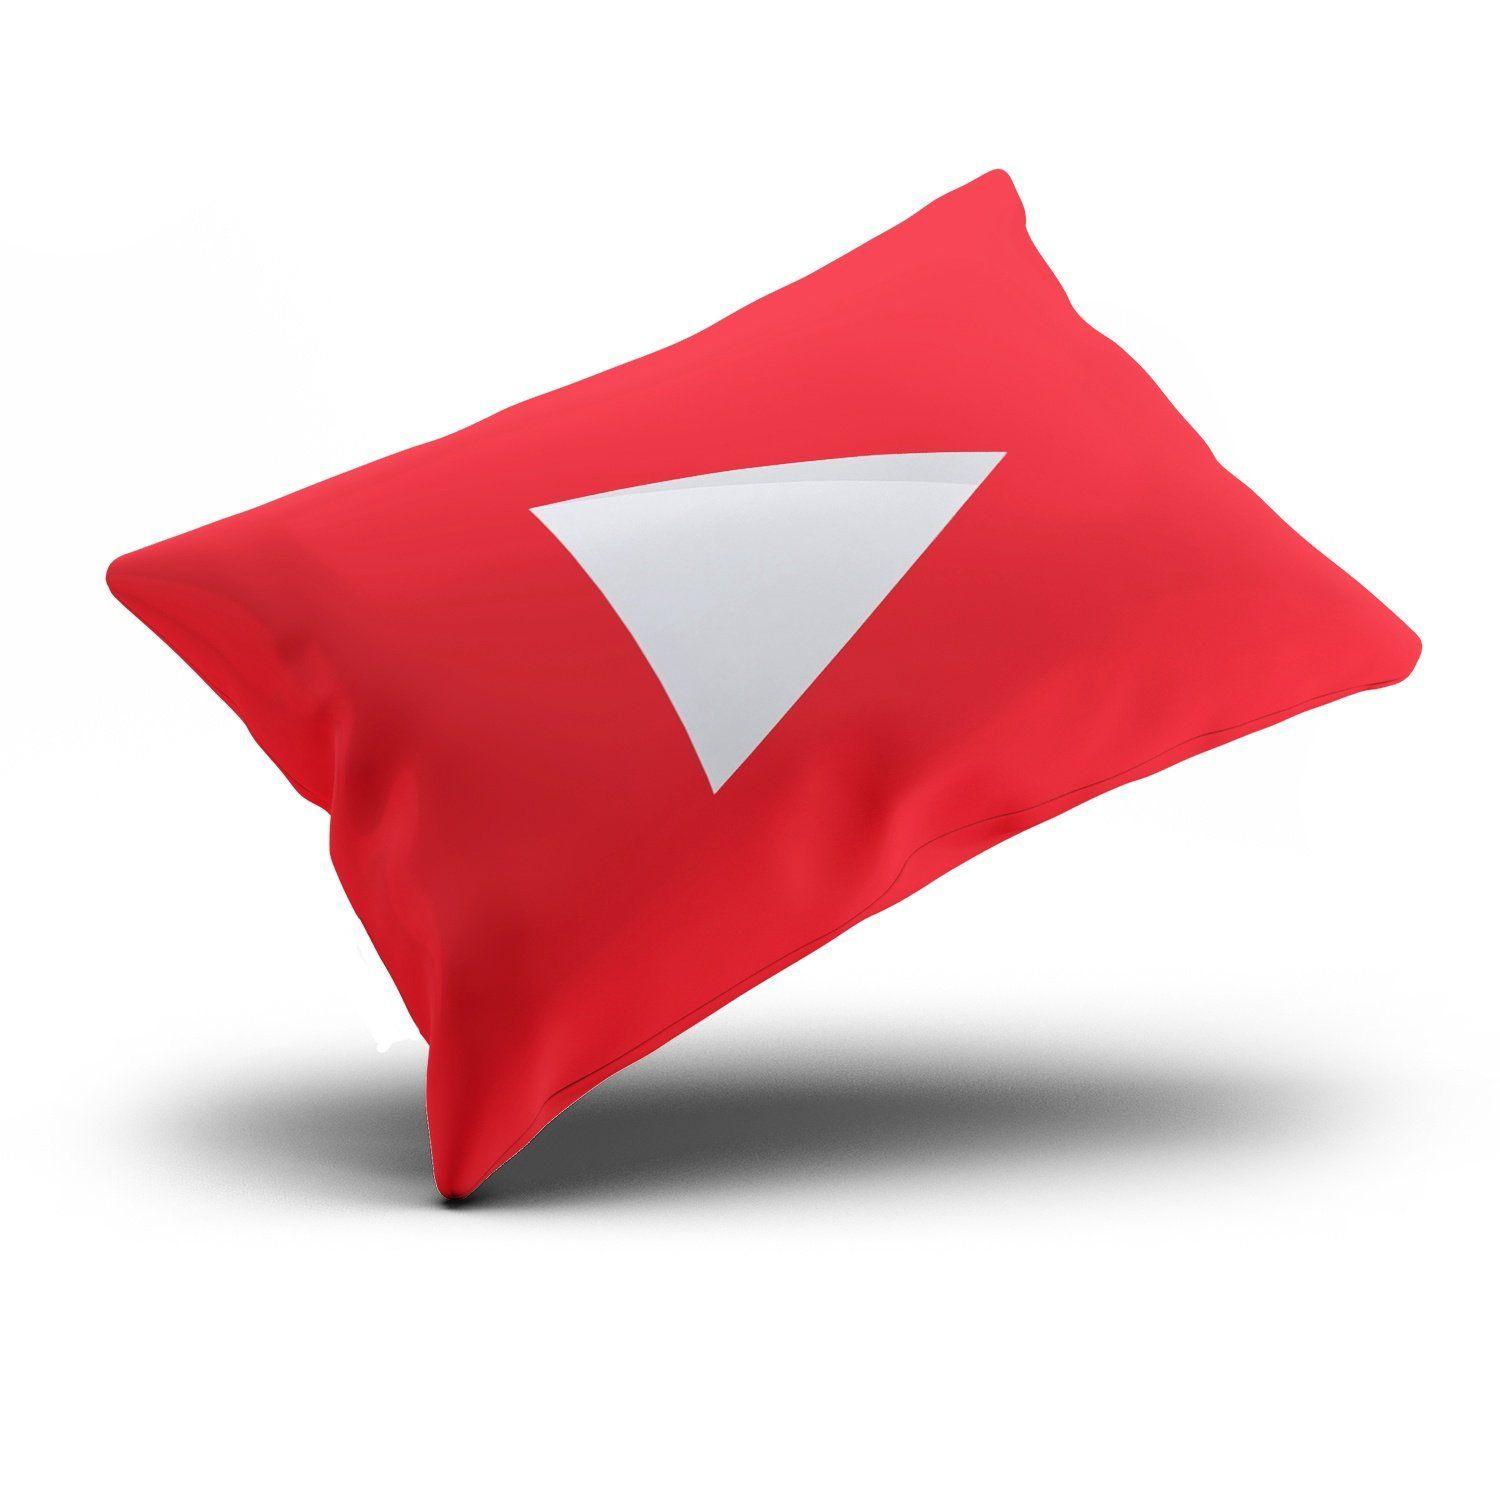 BX Red a Logo - Amazon.com: KEIBIKE Personalized Social Media Logo Youtube Rectangle ...